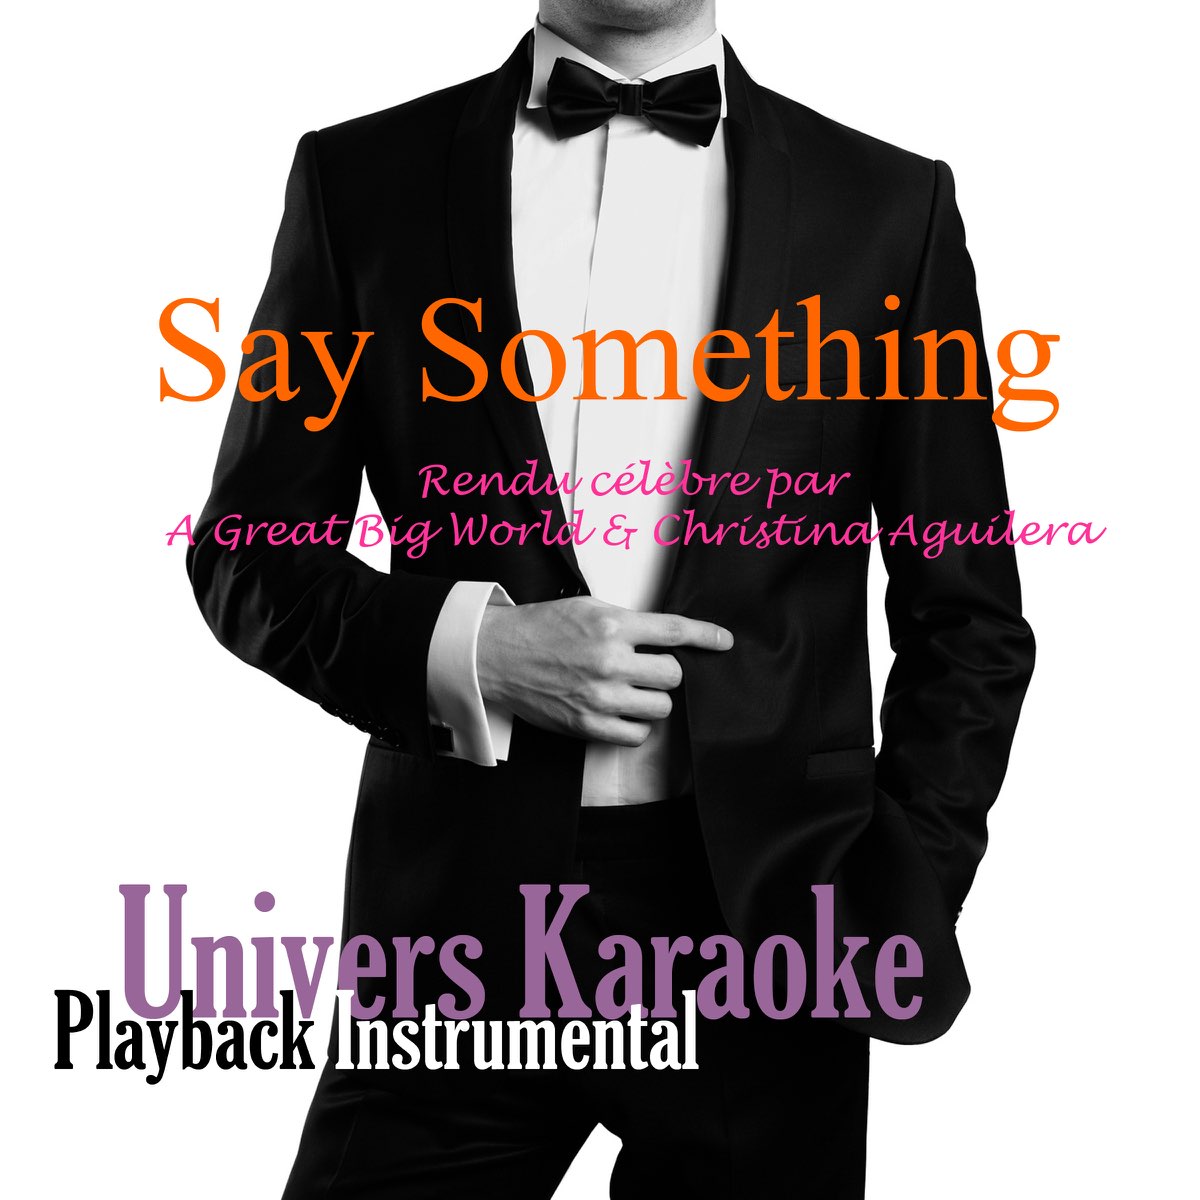 Say Something (Rendu célèbre par A Great Big World & Christina Aguilera)  [Version Karaoké] - Single by Univers Karaoké on Apple Music